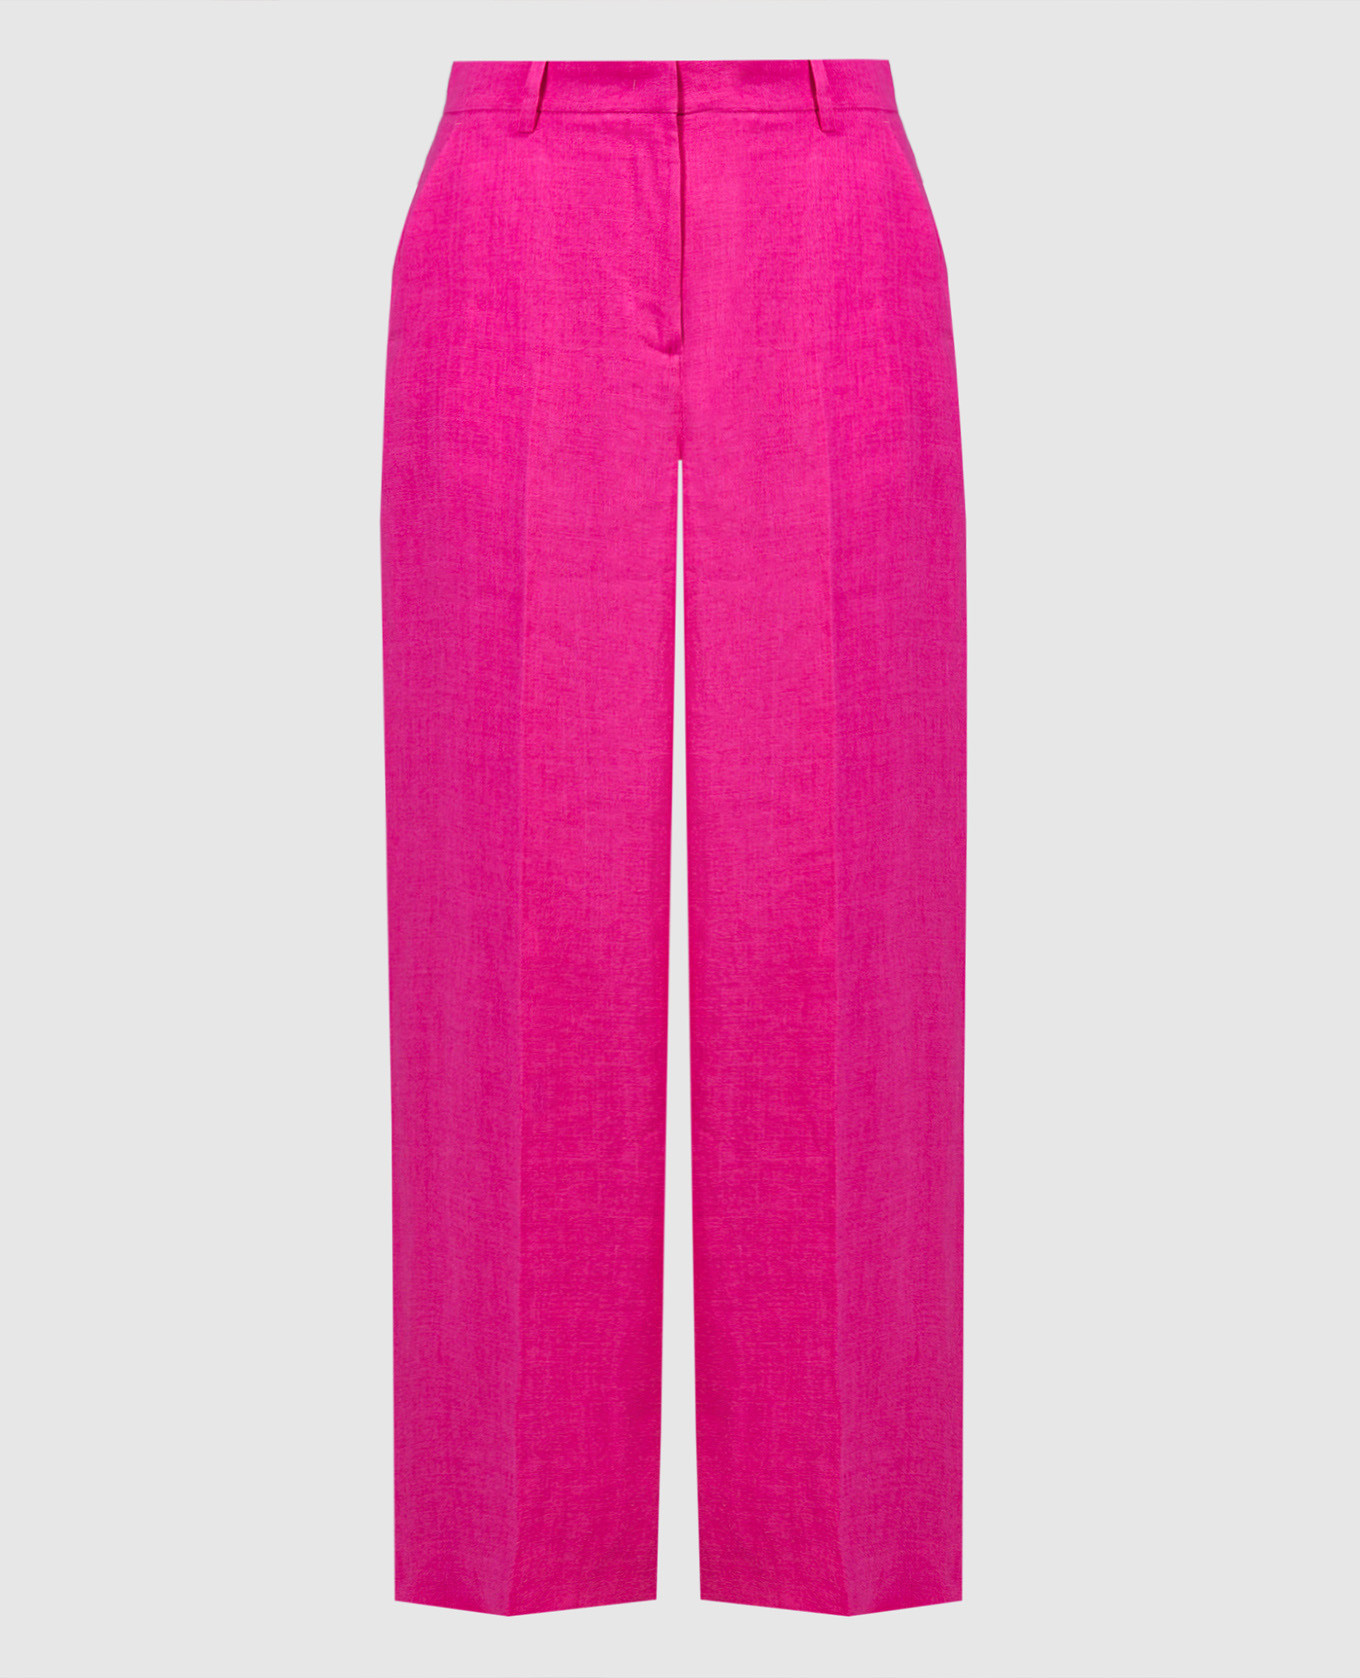 Malizia pink linen pants